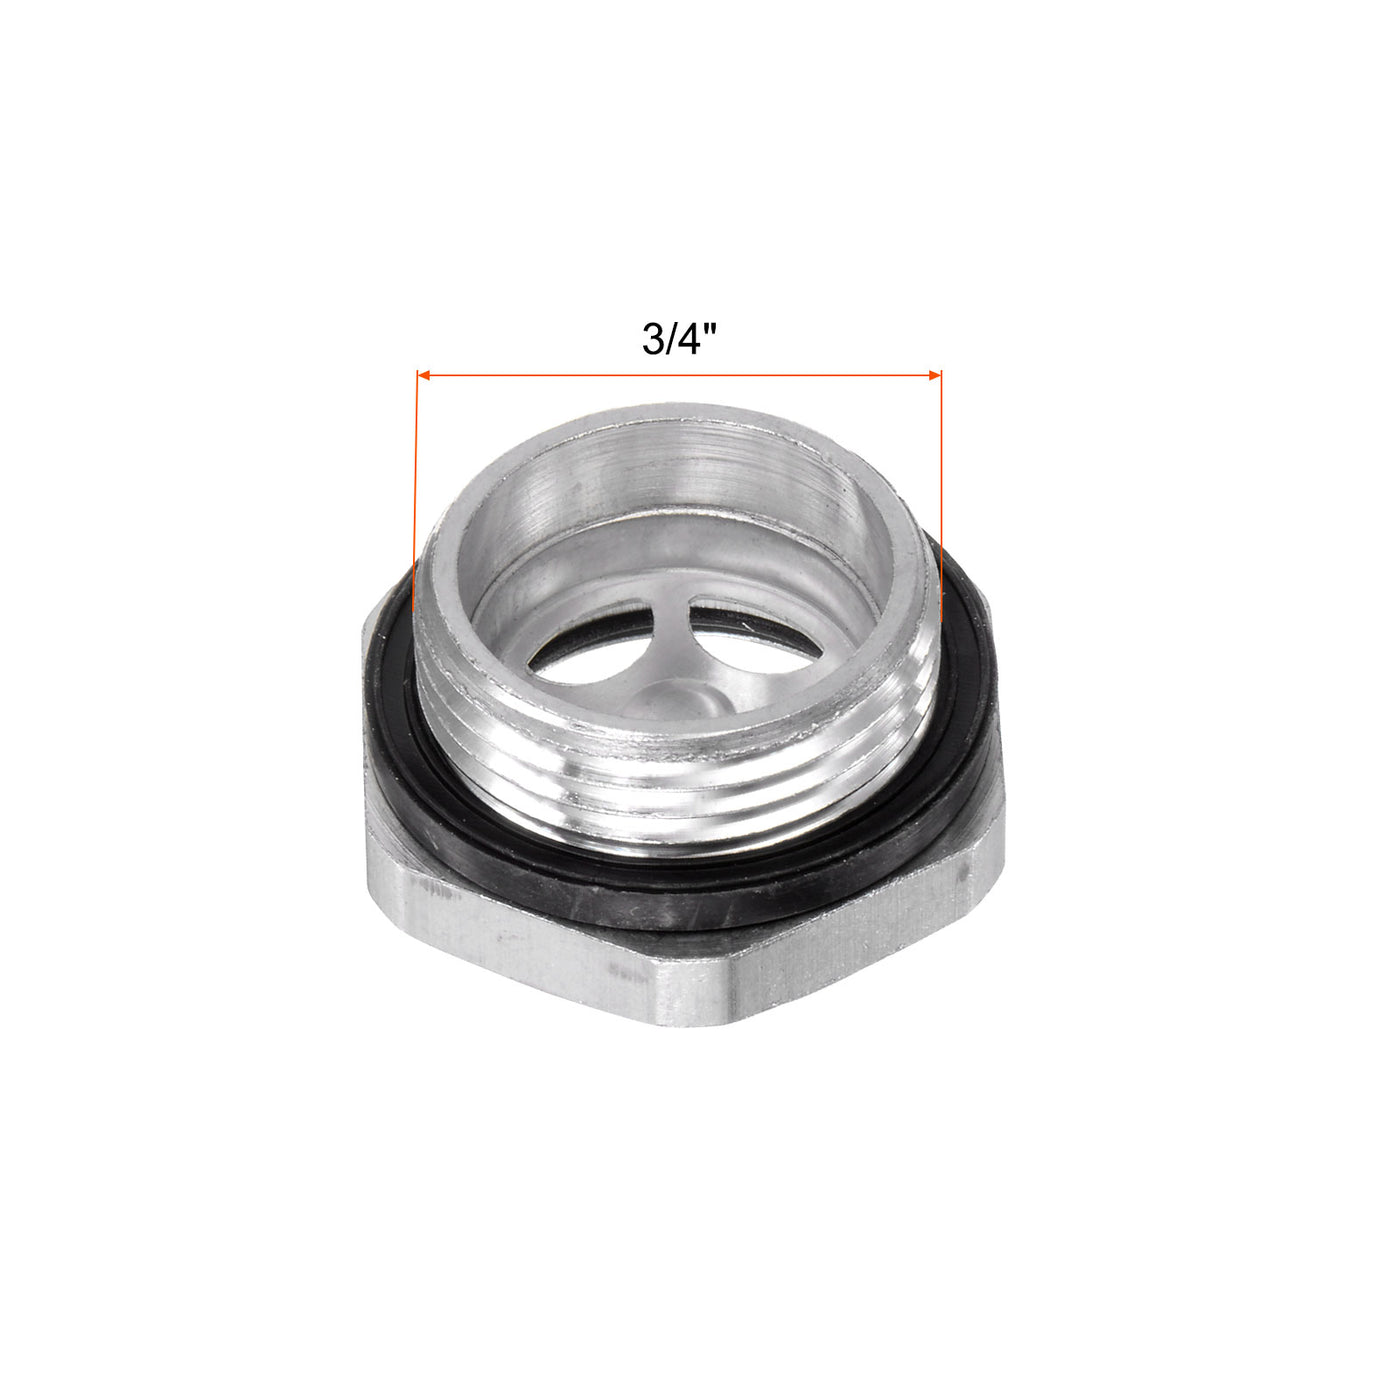 Uxcell Uxcell Air Compressor Oil Level Gauge Sight Glass G1-1/2 Male Thread Aluminum